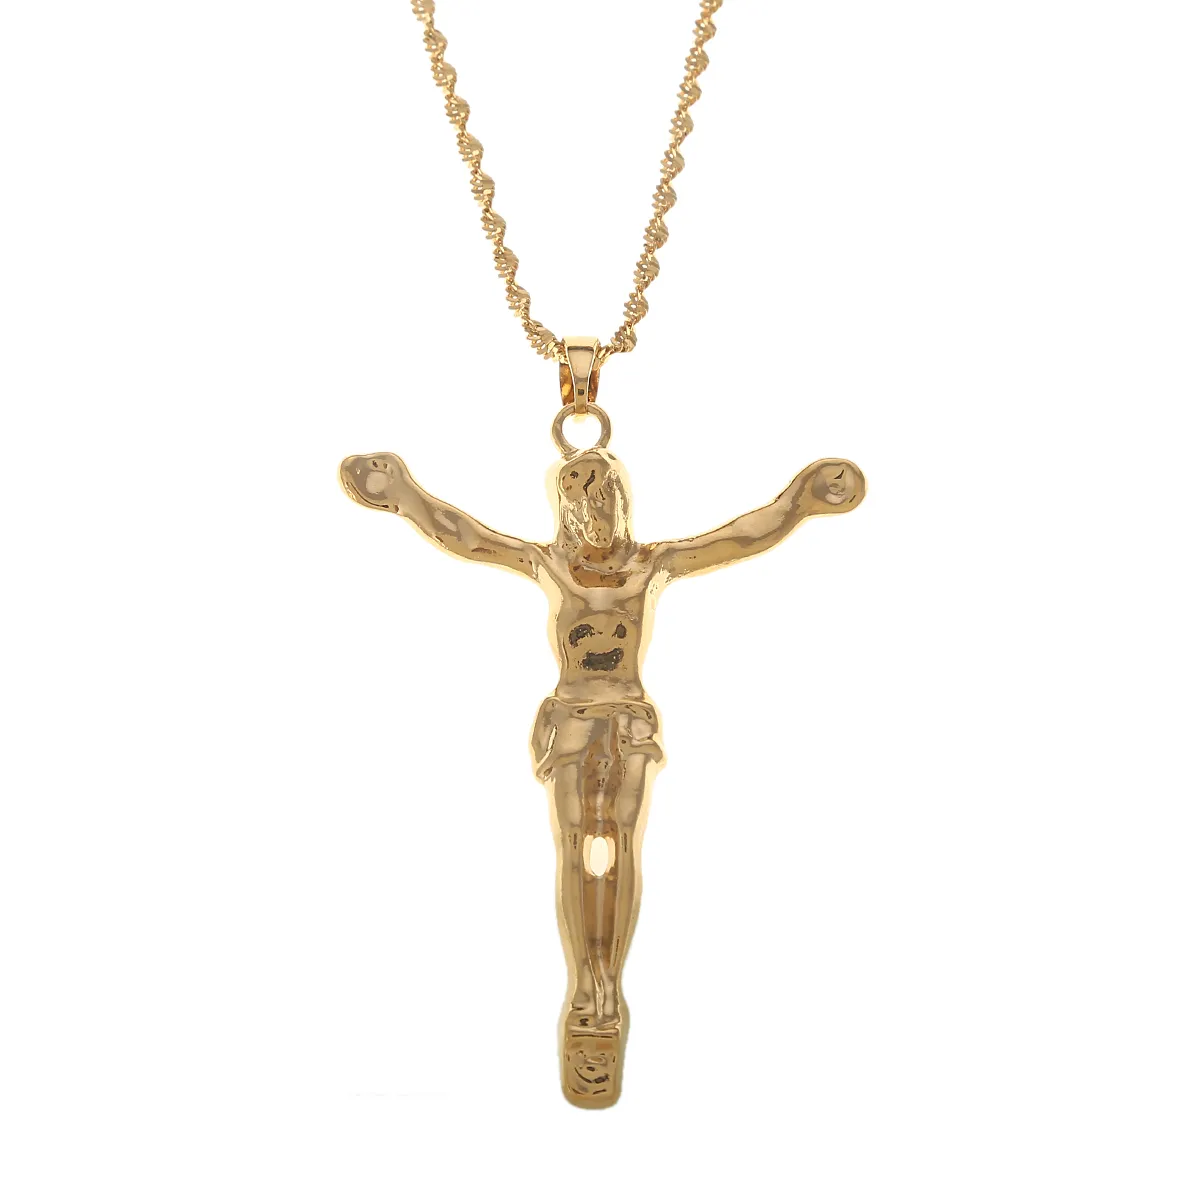 Jesus Cross Pendant Necklaces Gold Color Charm Pendant For Women Christian Jewelry Crucifix Necklace